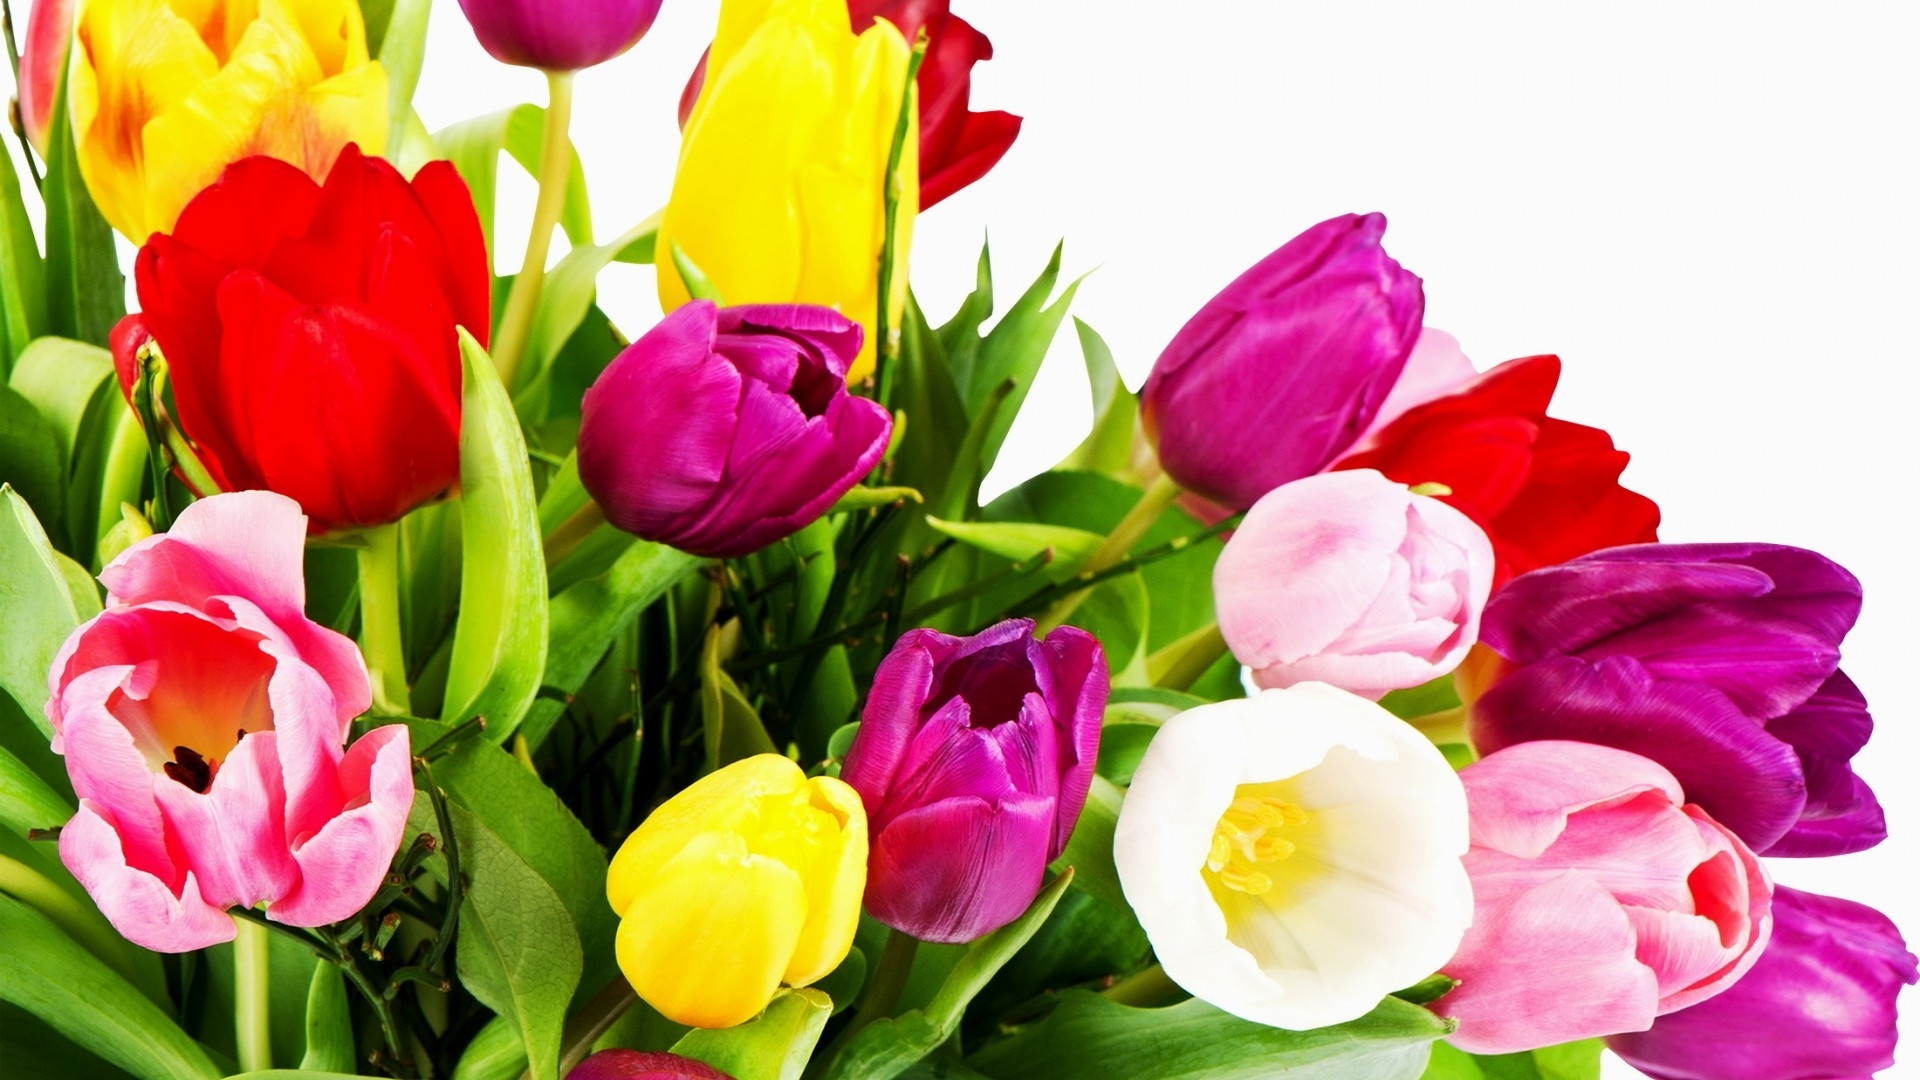 Wonderful Tulips for 1920 x 1080 HDTV 1080p resolution